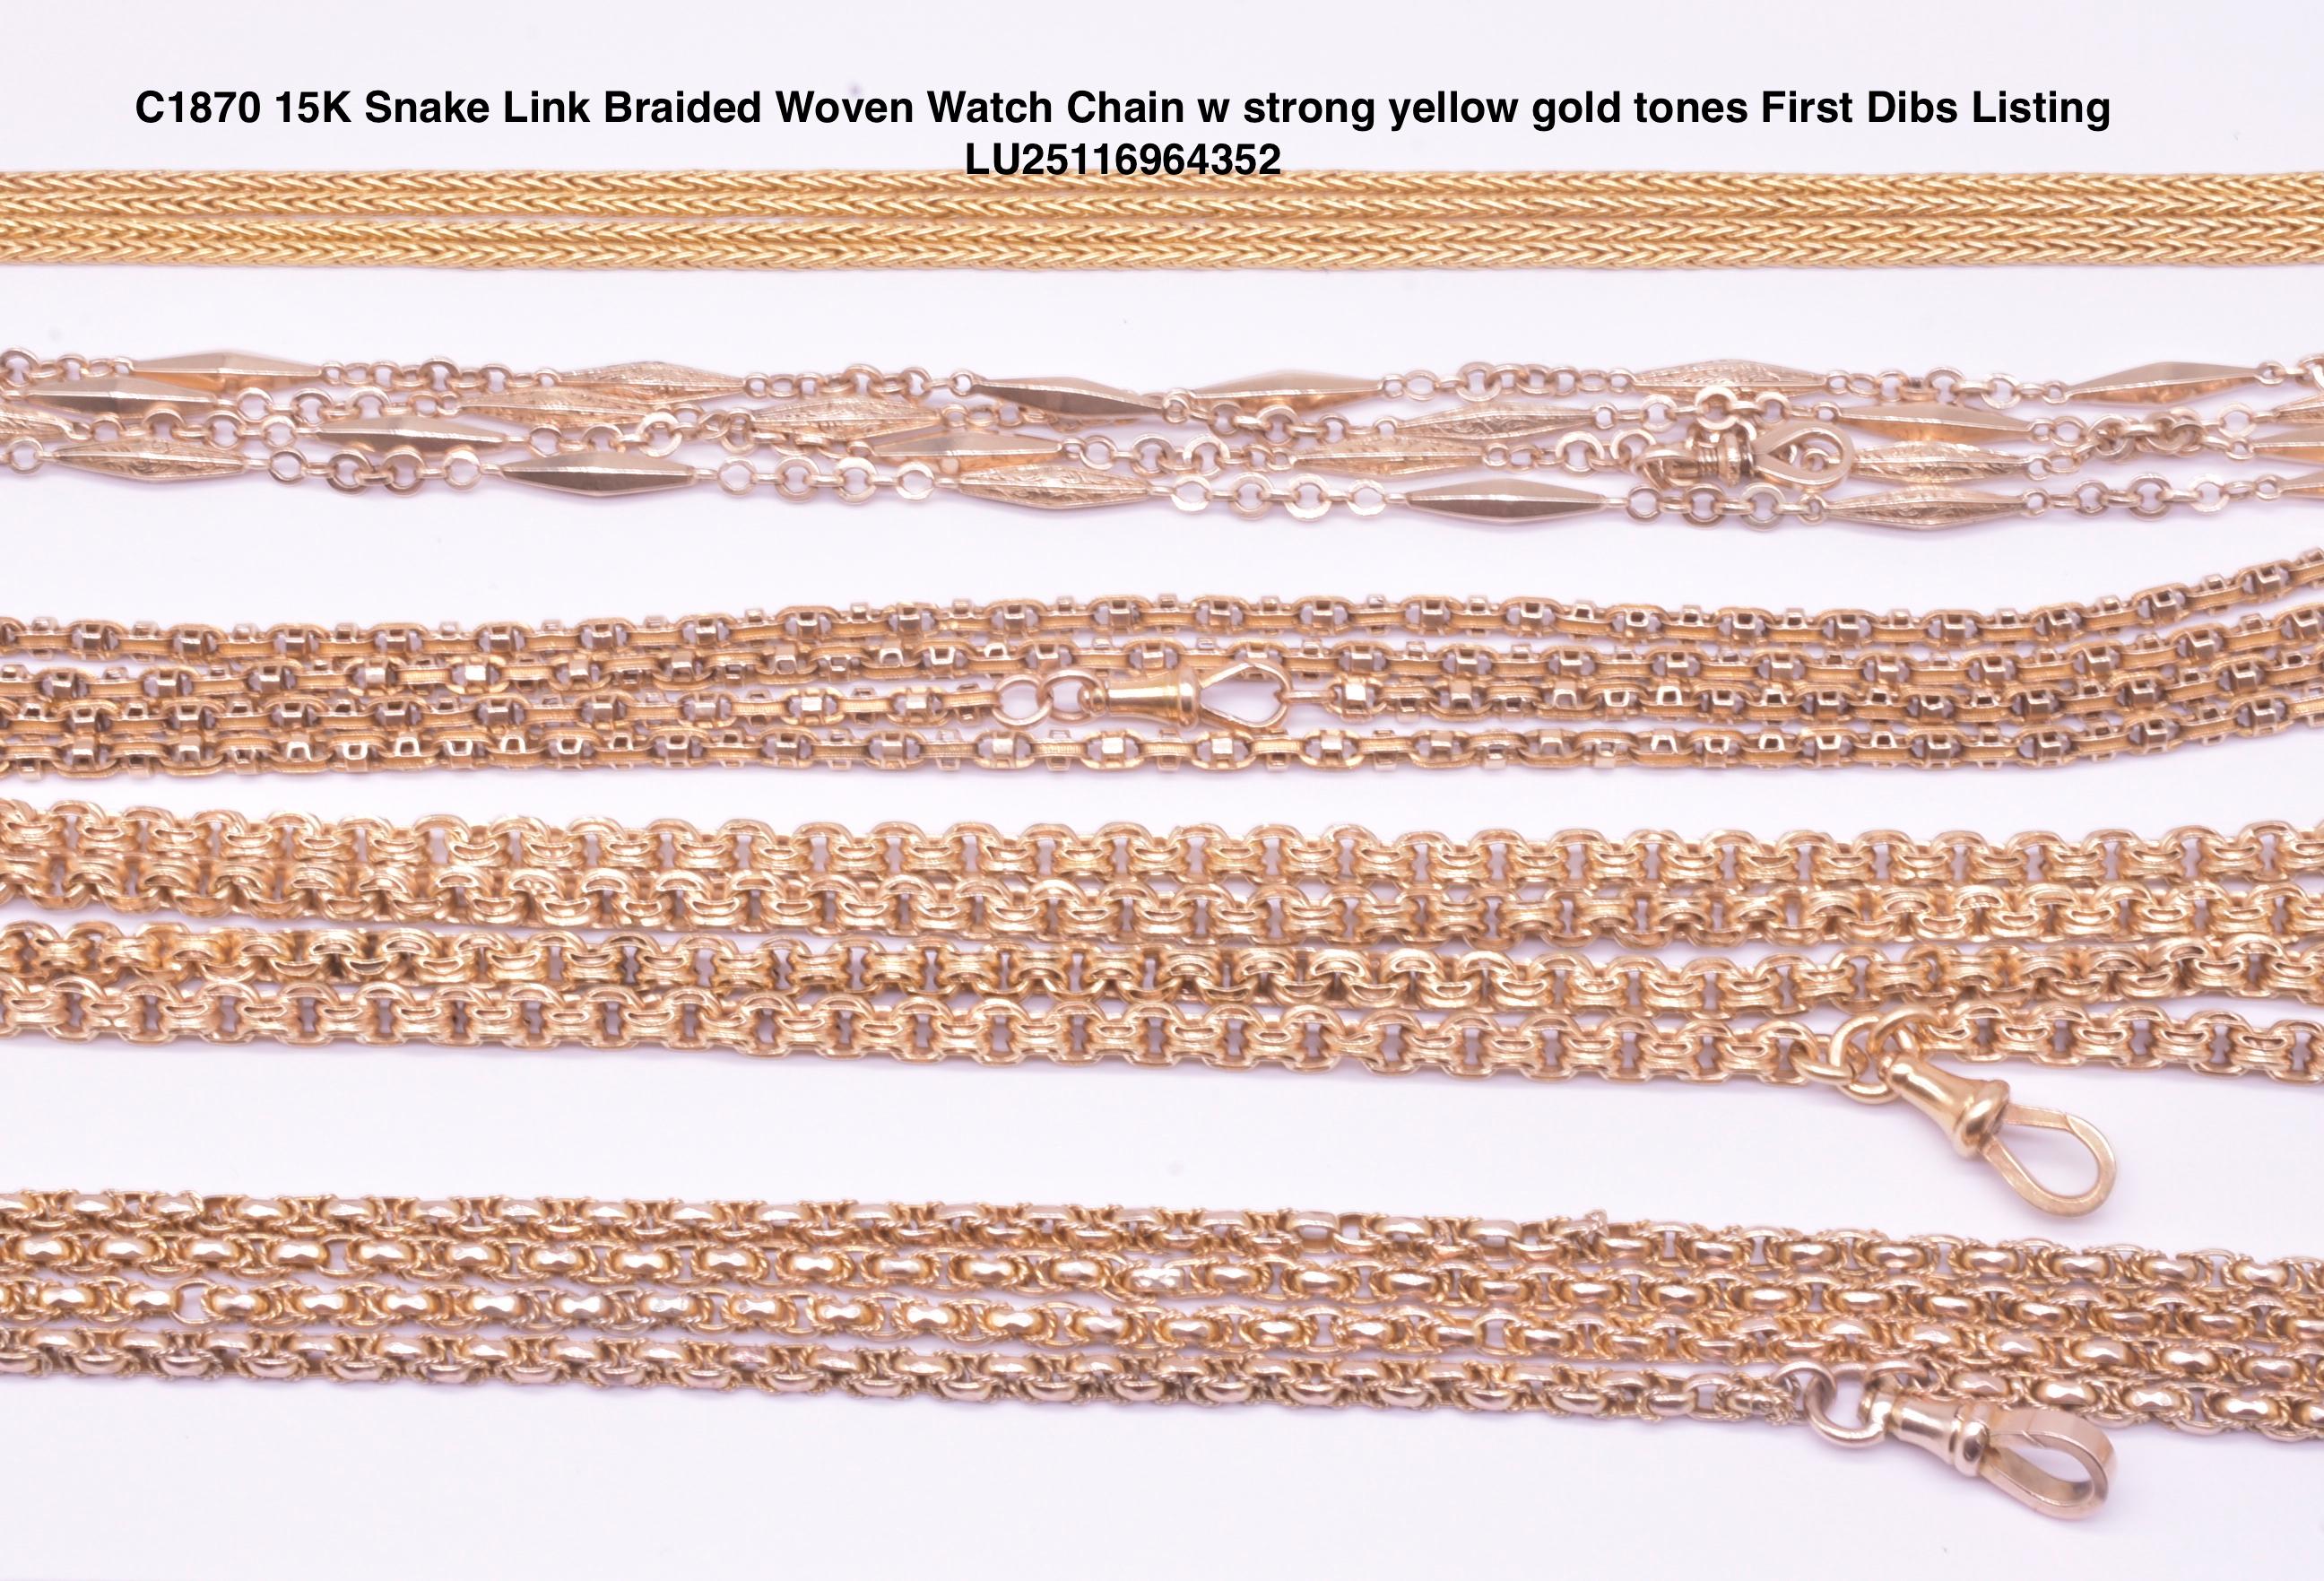 Victorian 15 Karat Snake Link Braided Woven Gold Watch Chain, 56